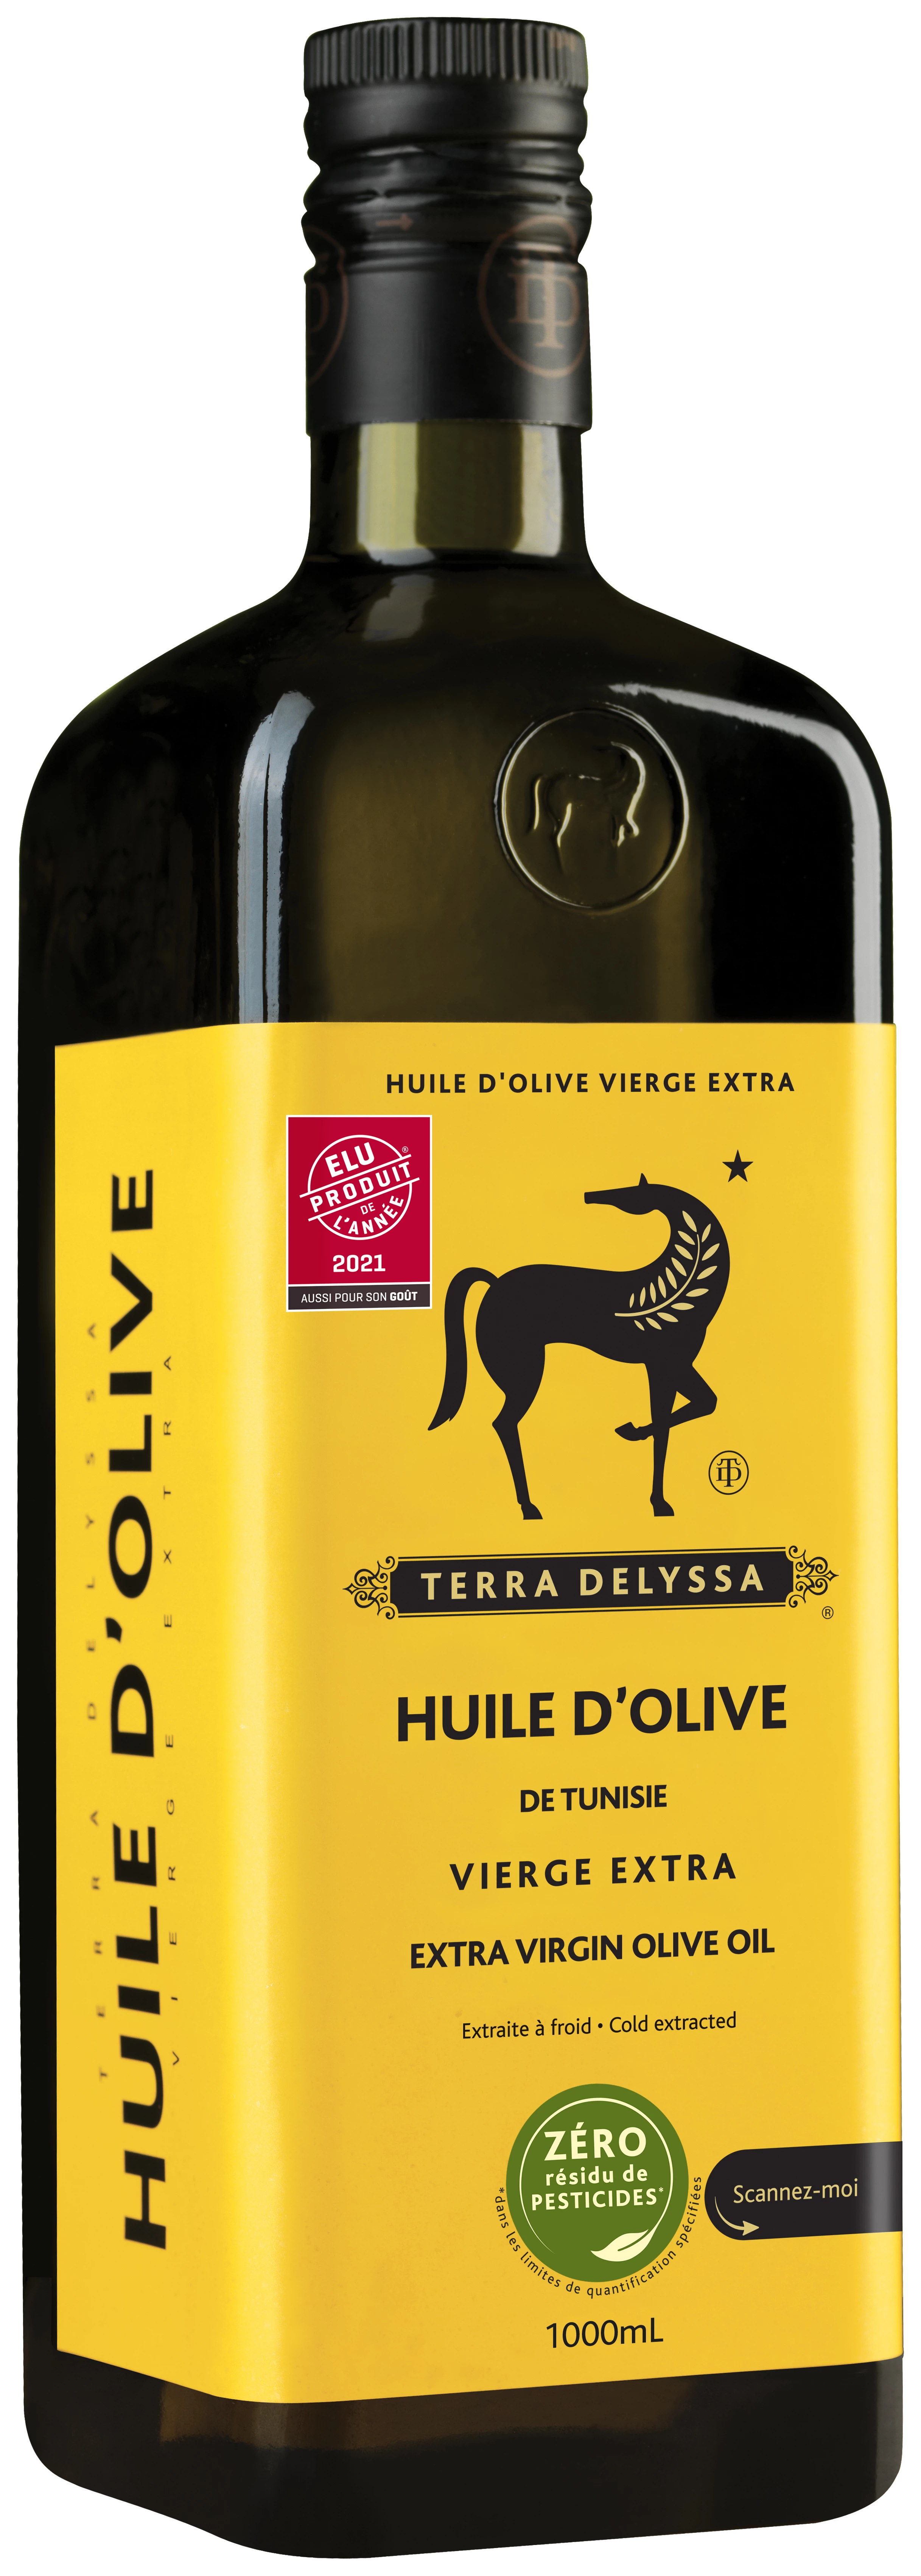 Extra vierge olijfolie, 1L - TERRA deLYSSA